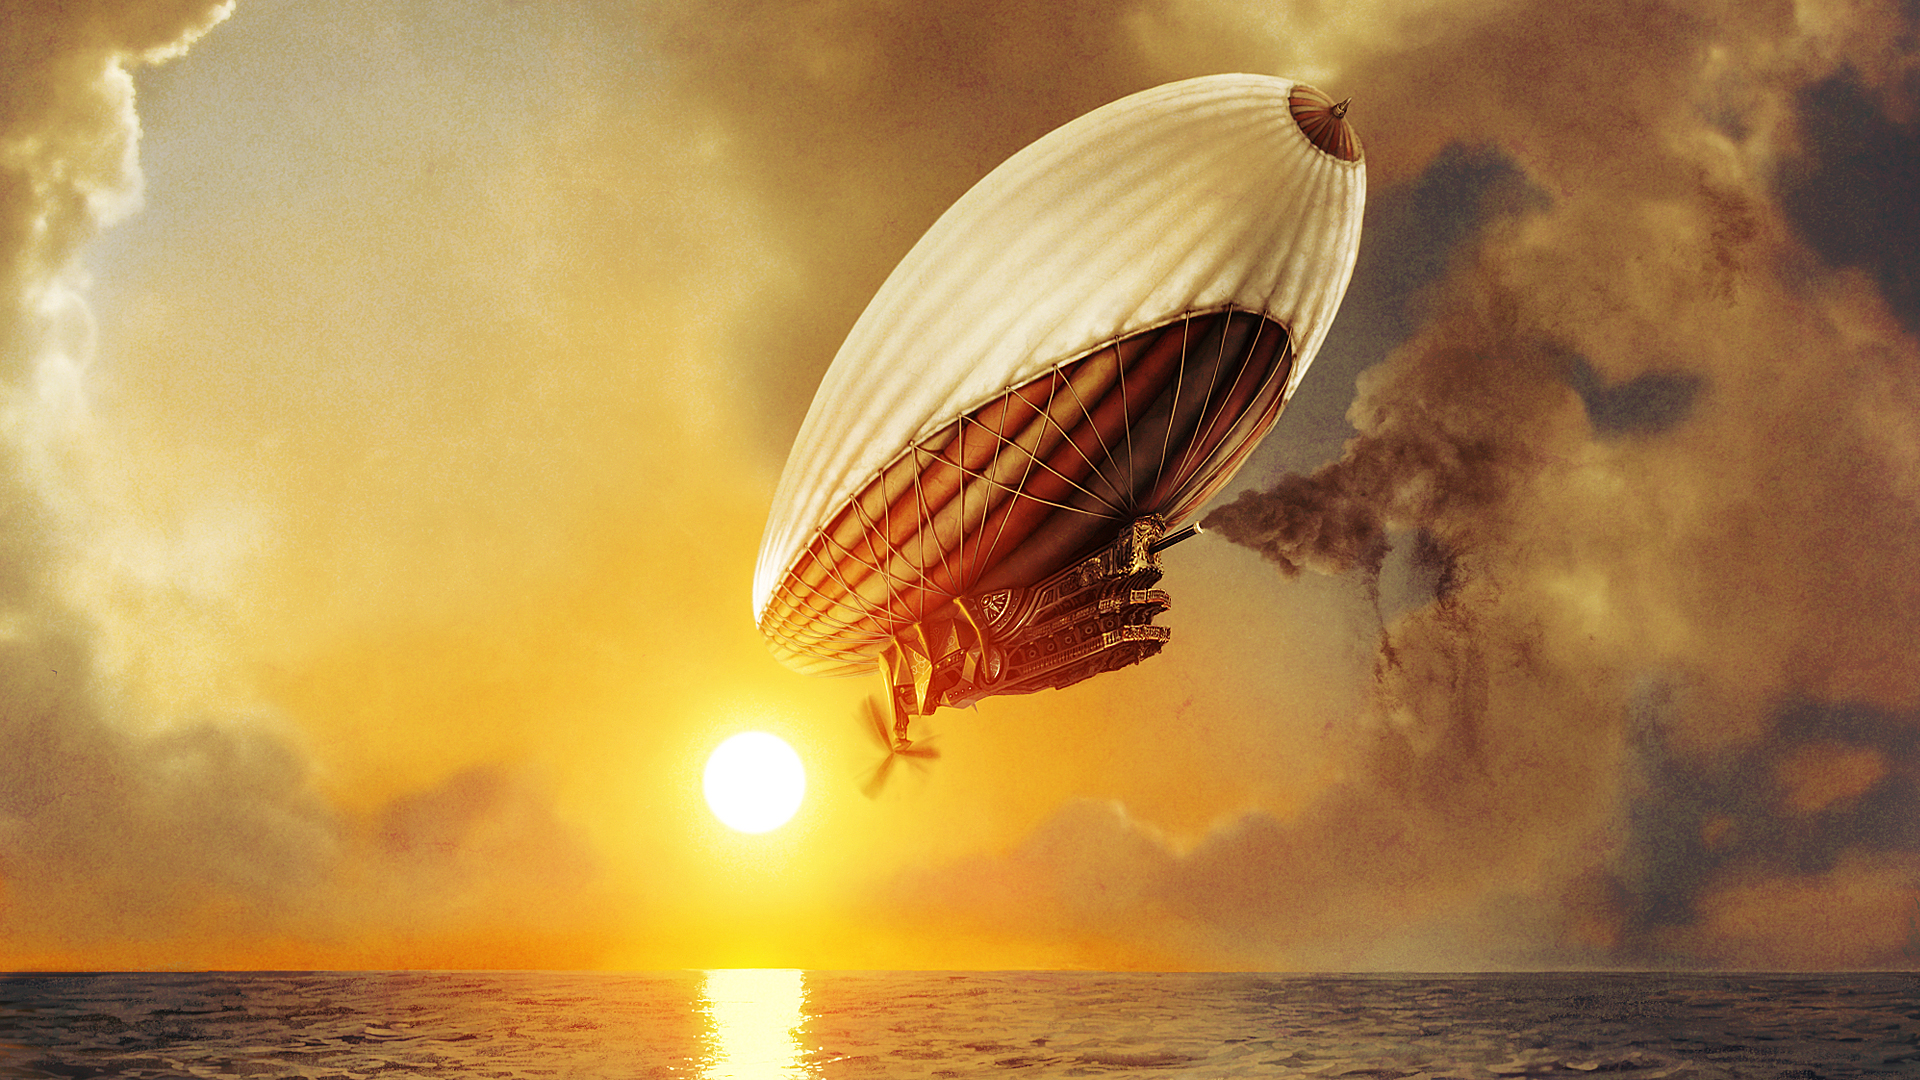 steampunk airship background